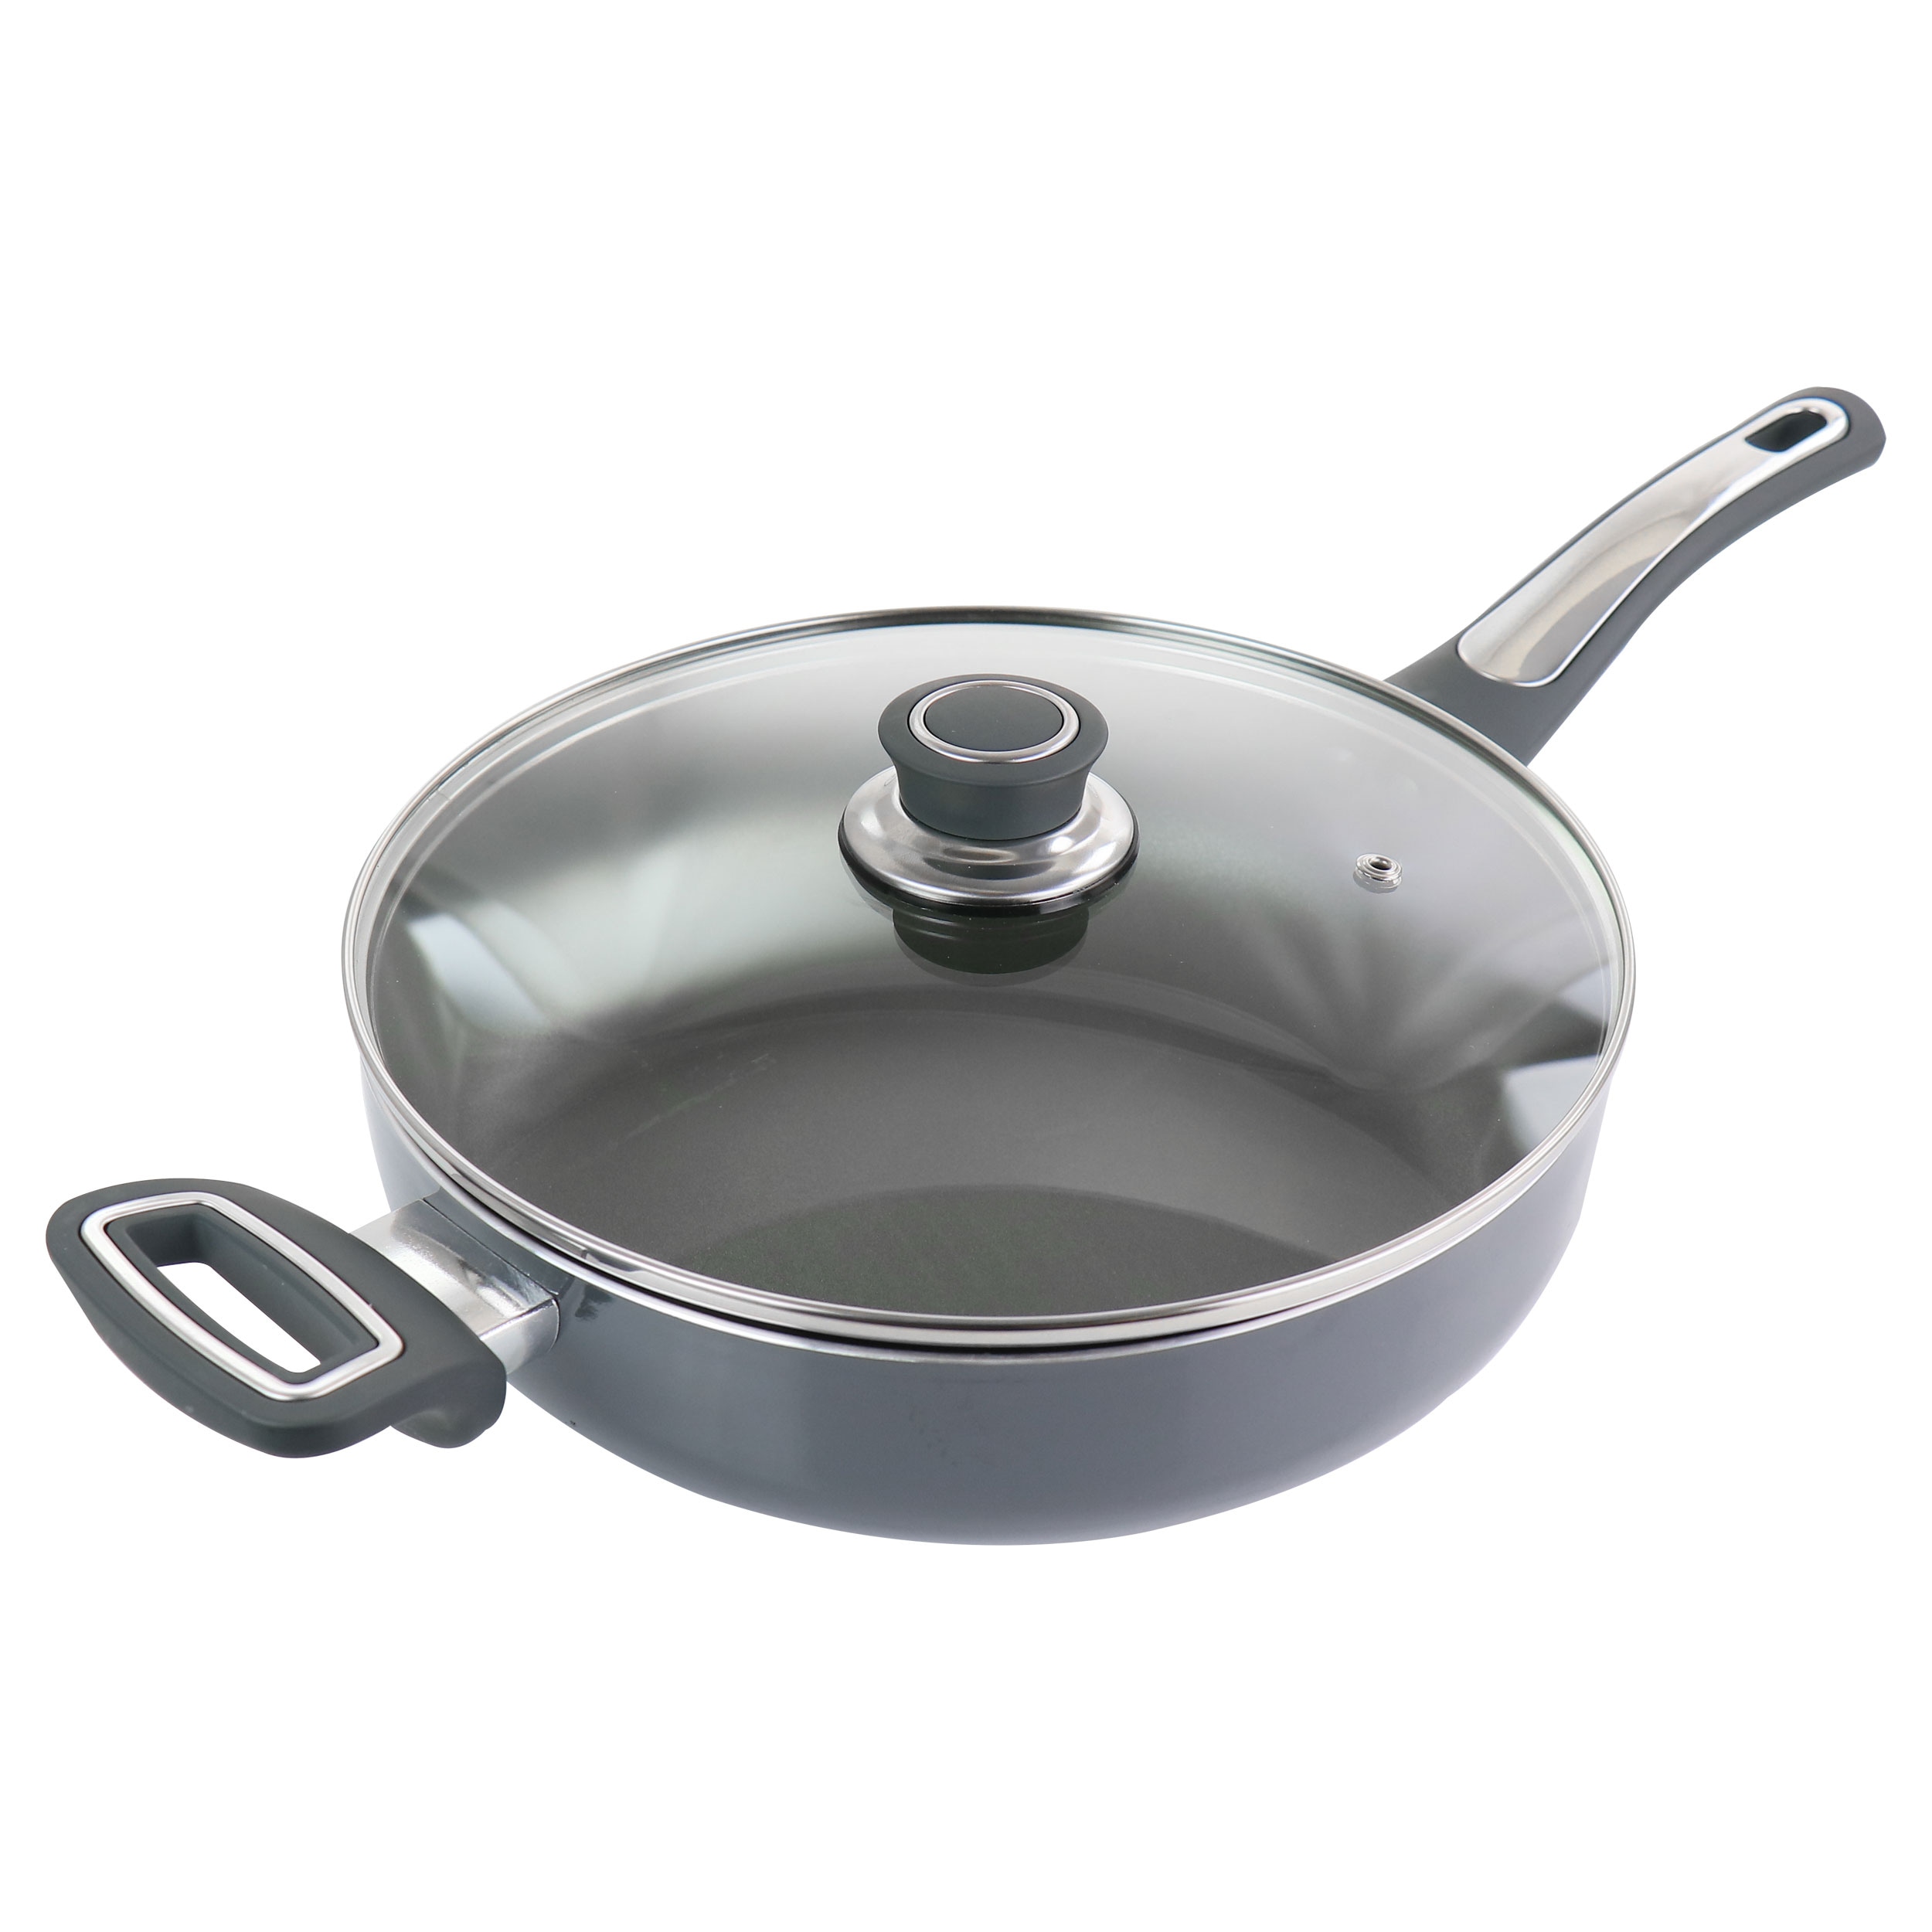 Oster 4.7 Quart Aluminum Saute Pan With Lid